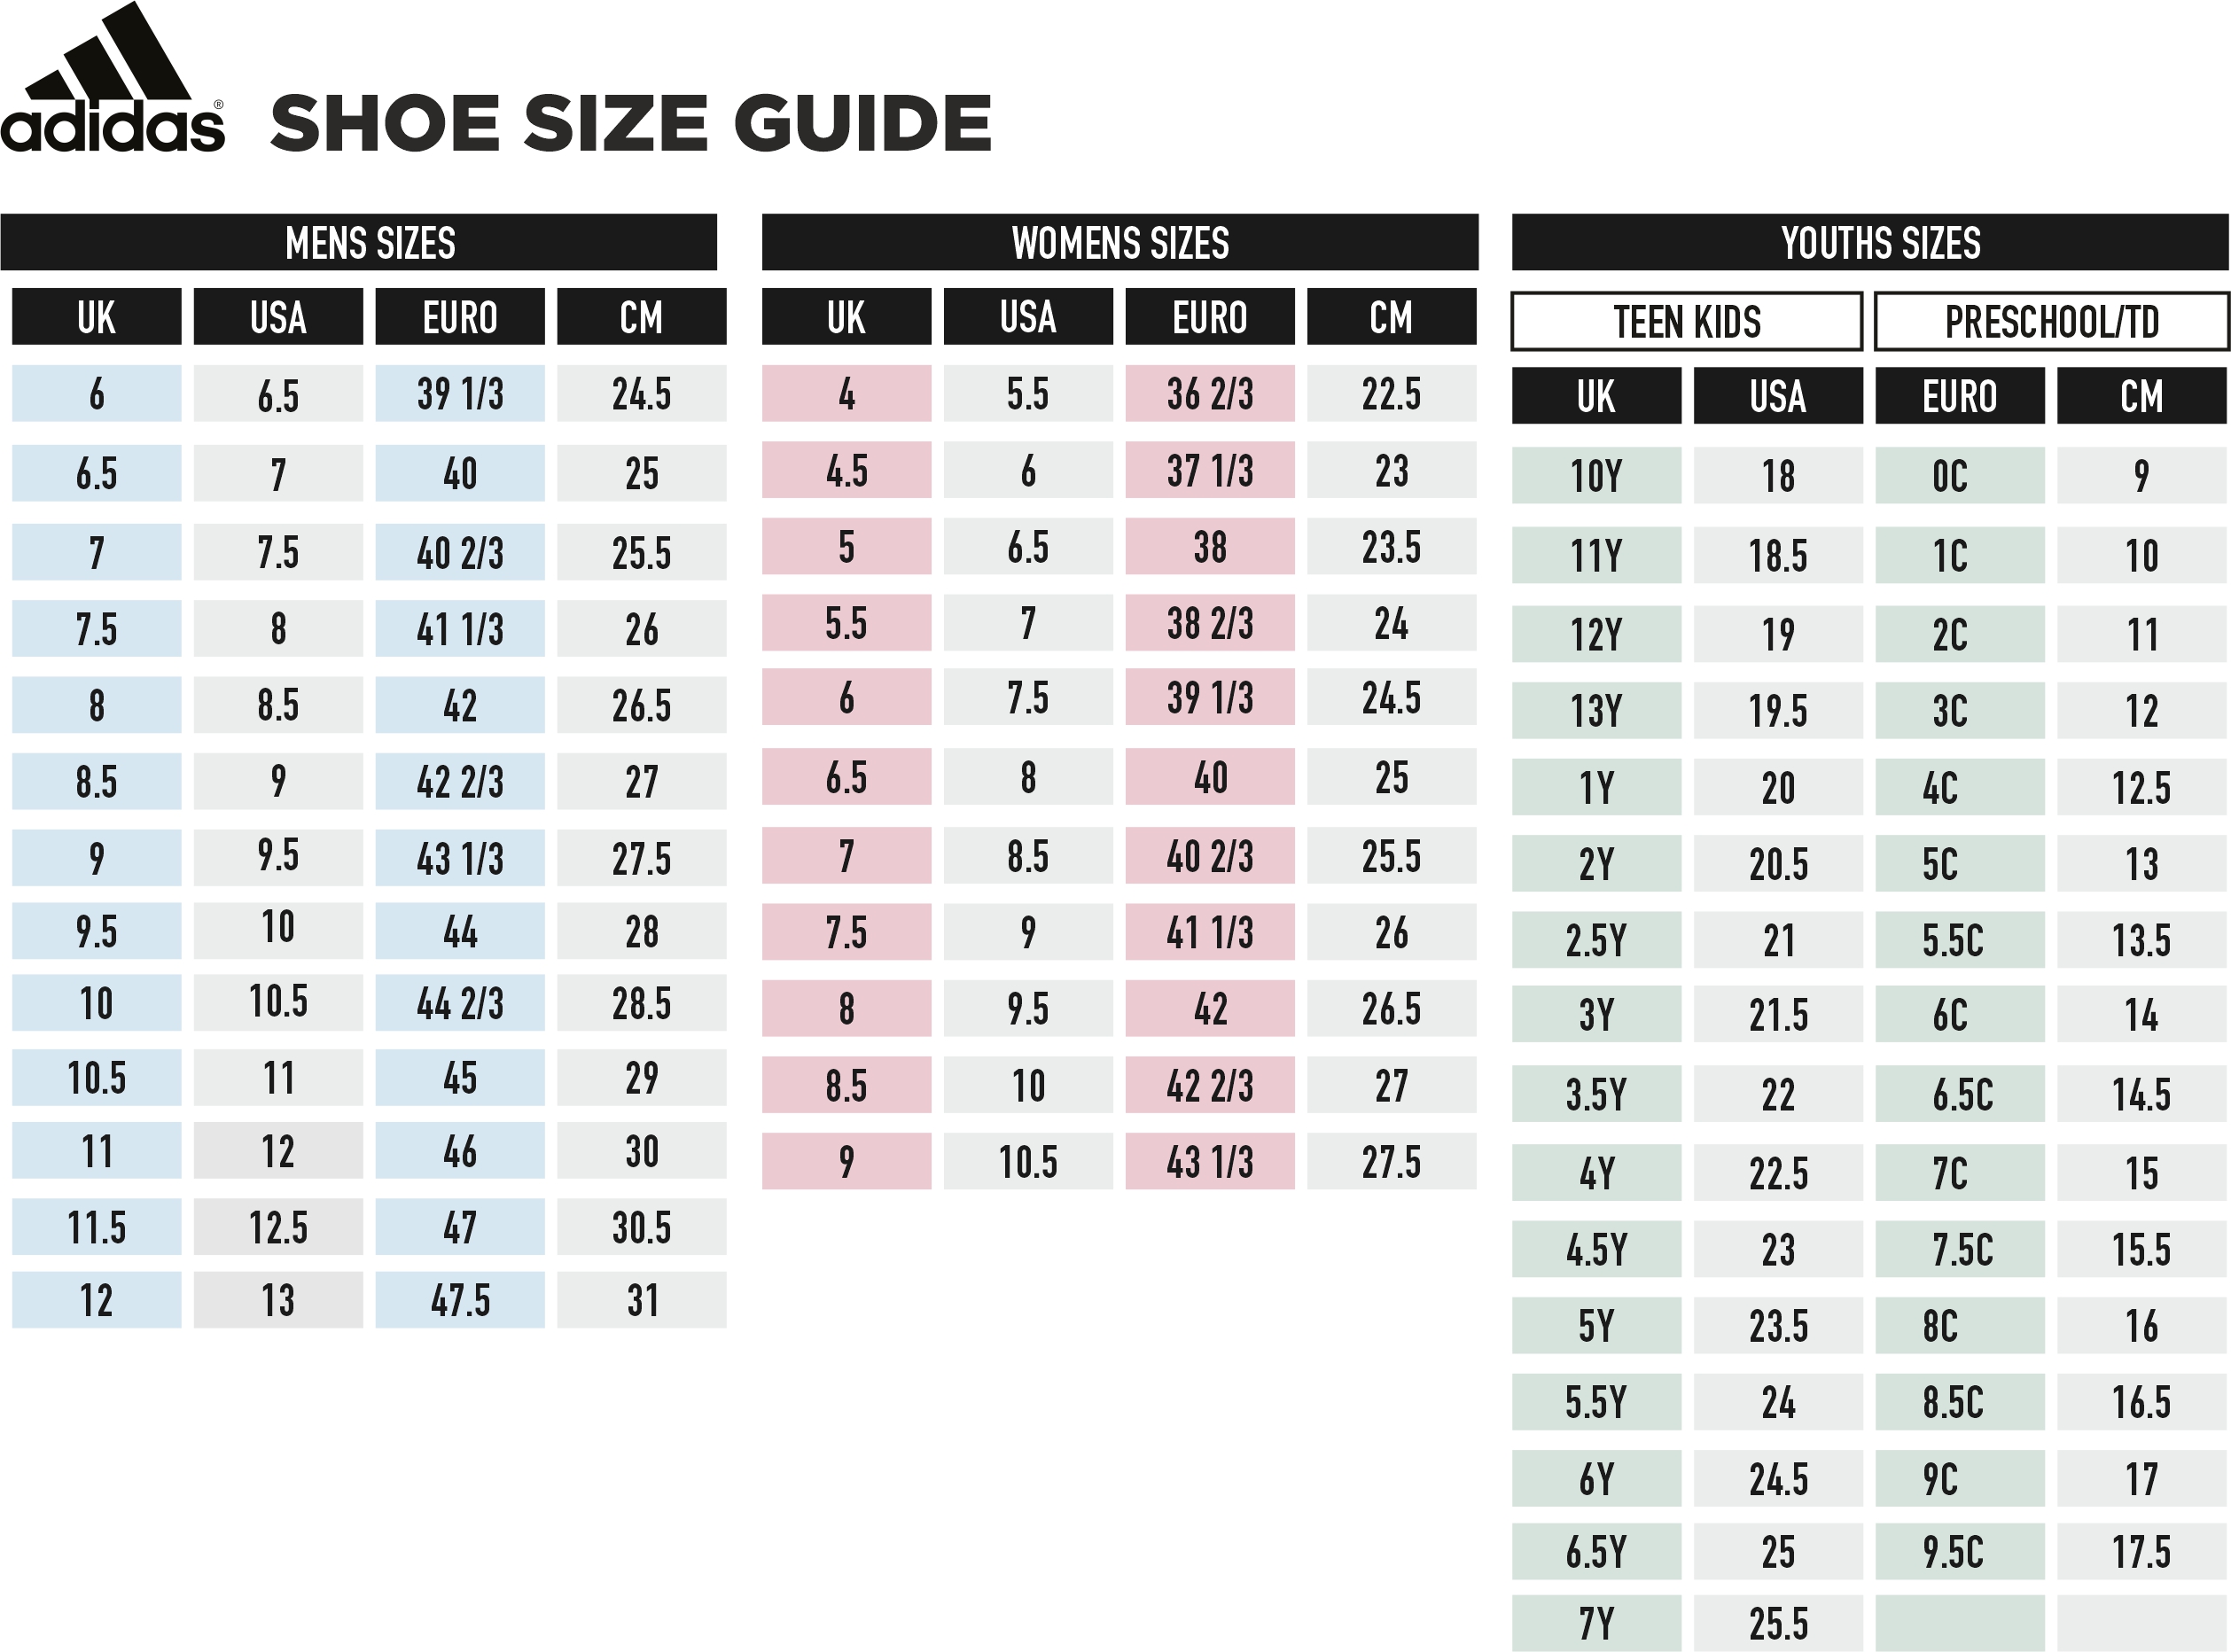 brooks shoe size compared to nike